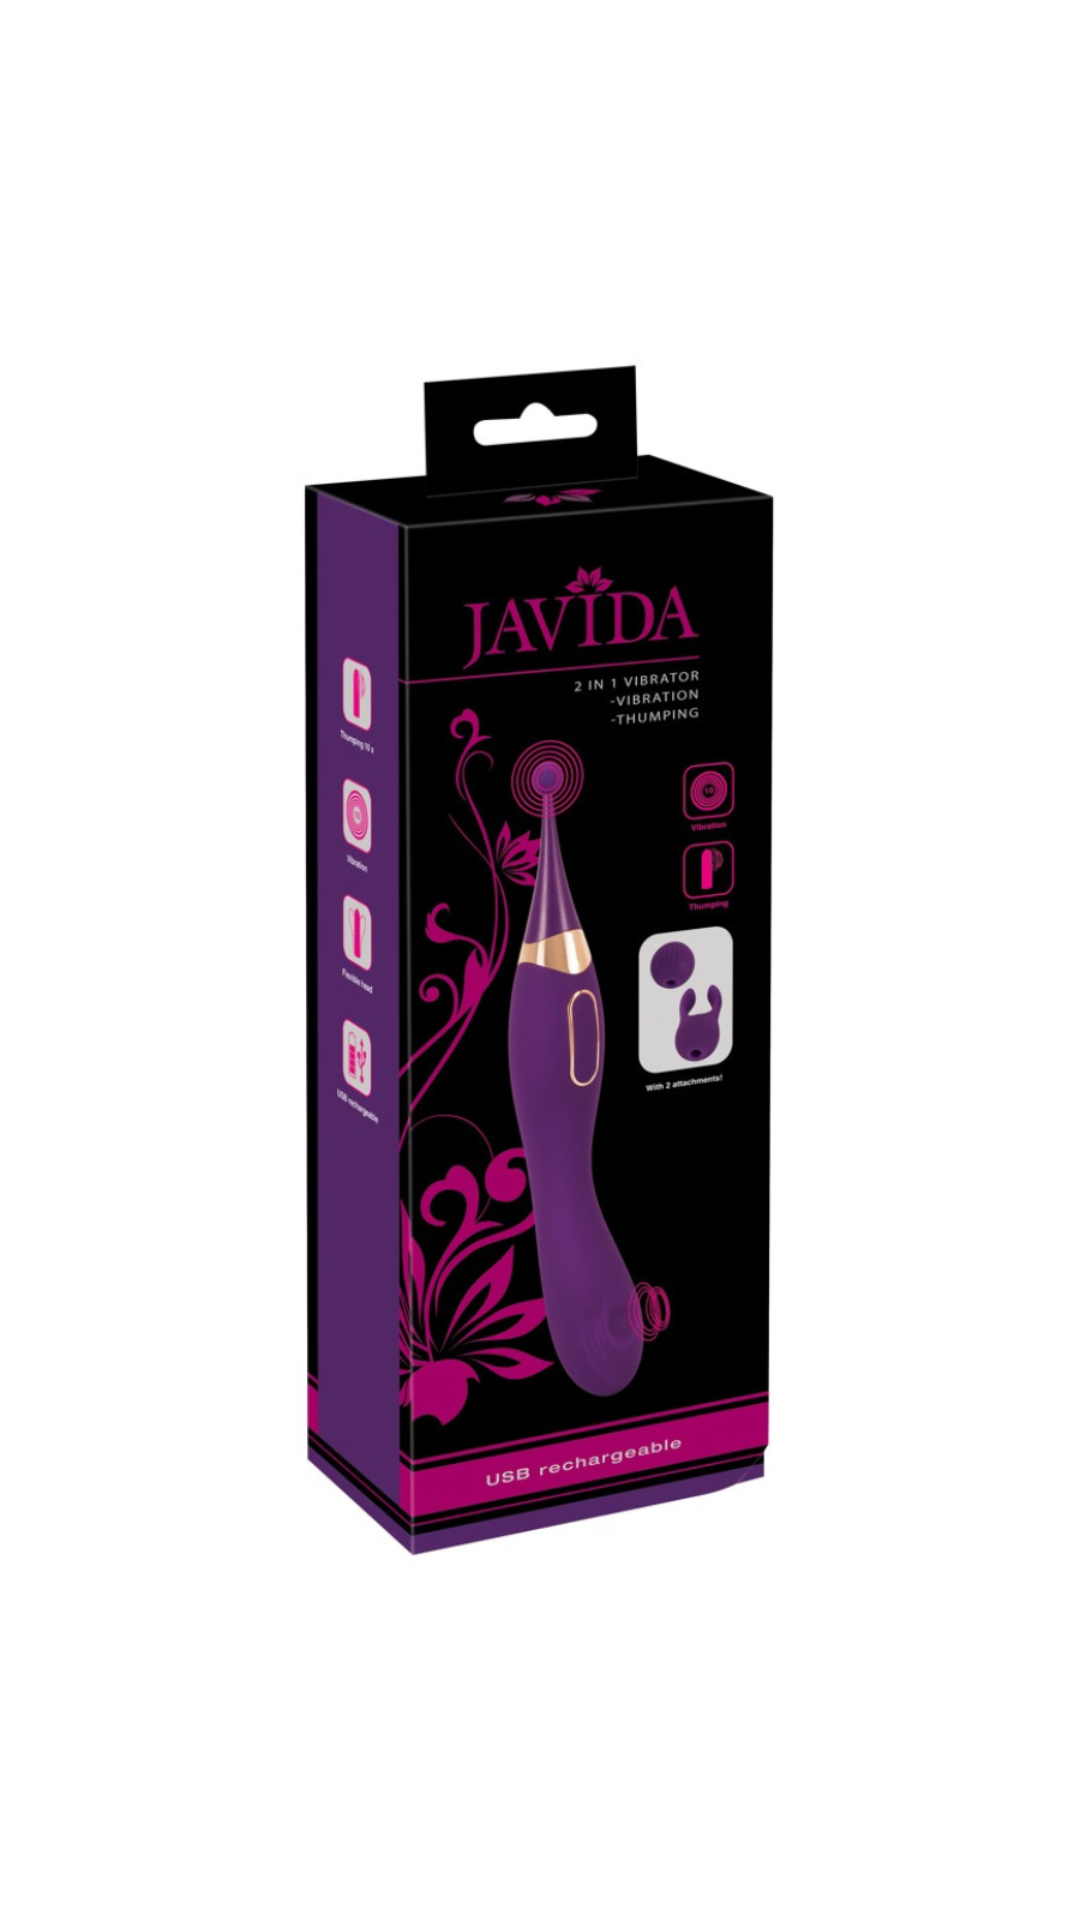 Javida 2-in-1 vibrator – Chaleplaisir